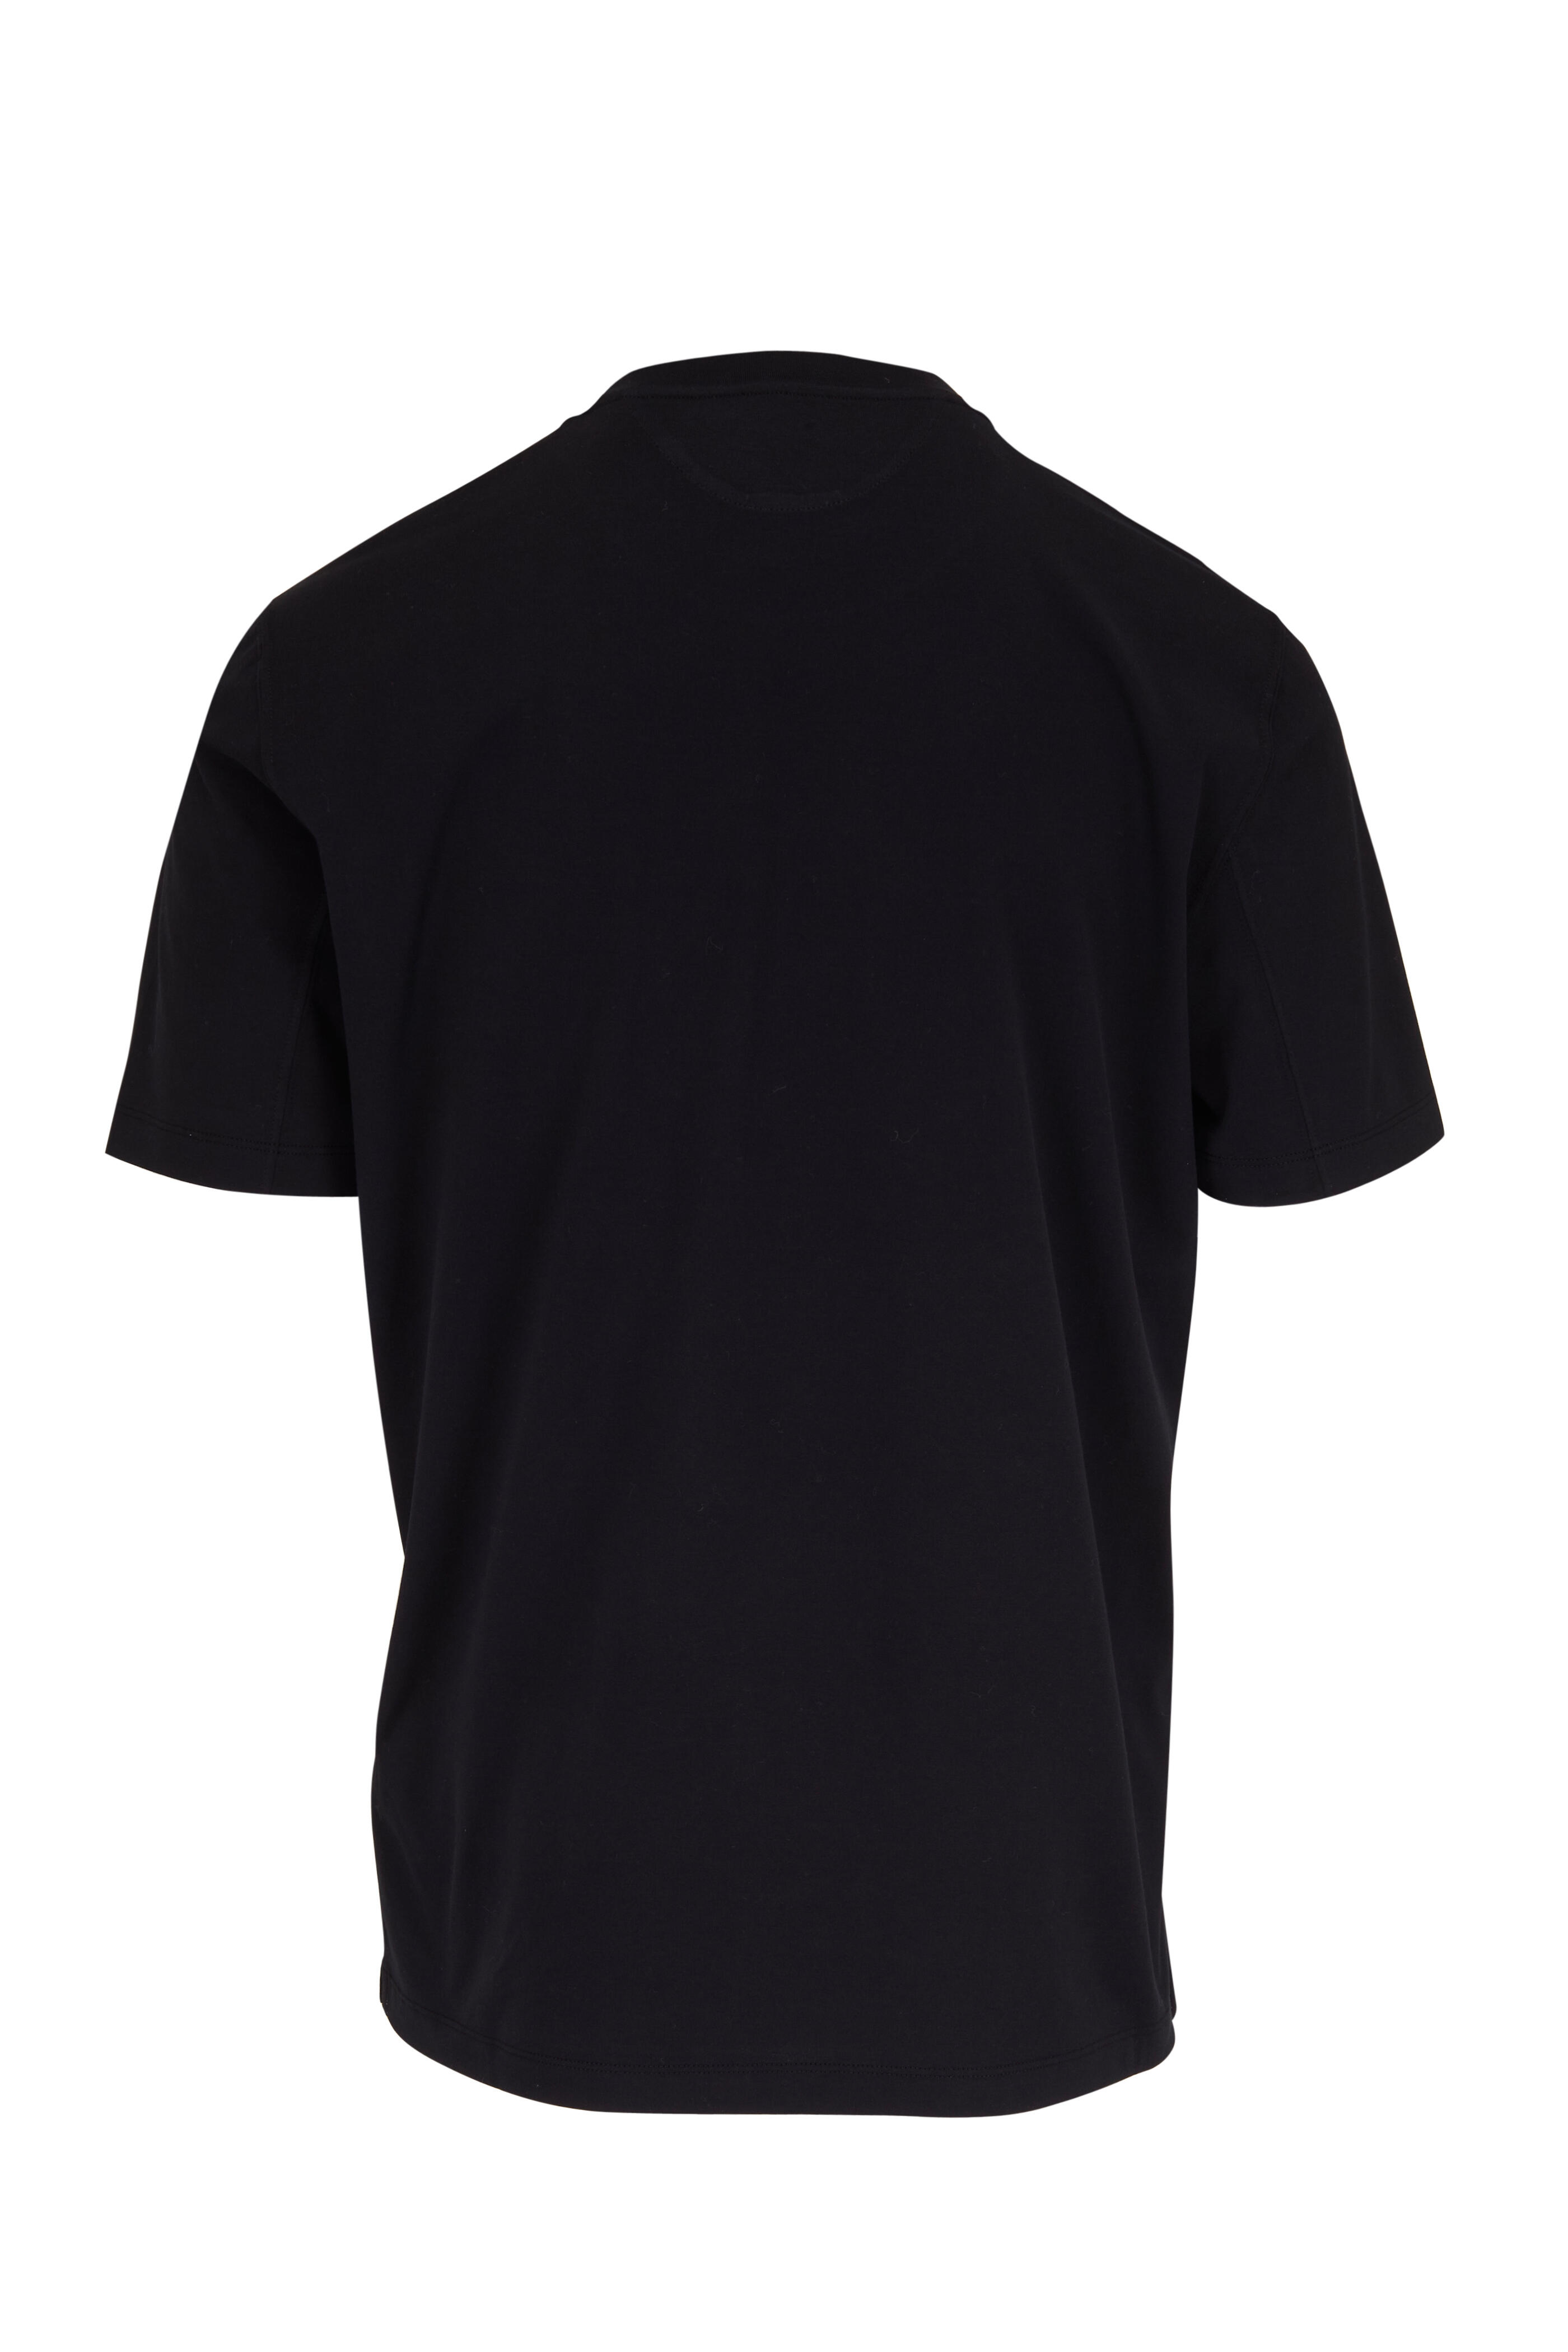 Brunello Cucinelli - Black Cotton Crewneck T-Shirt